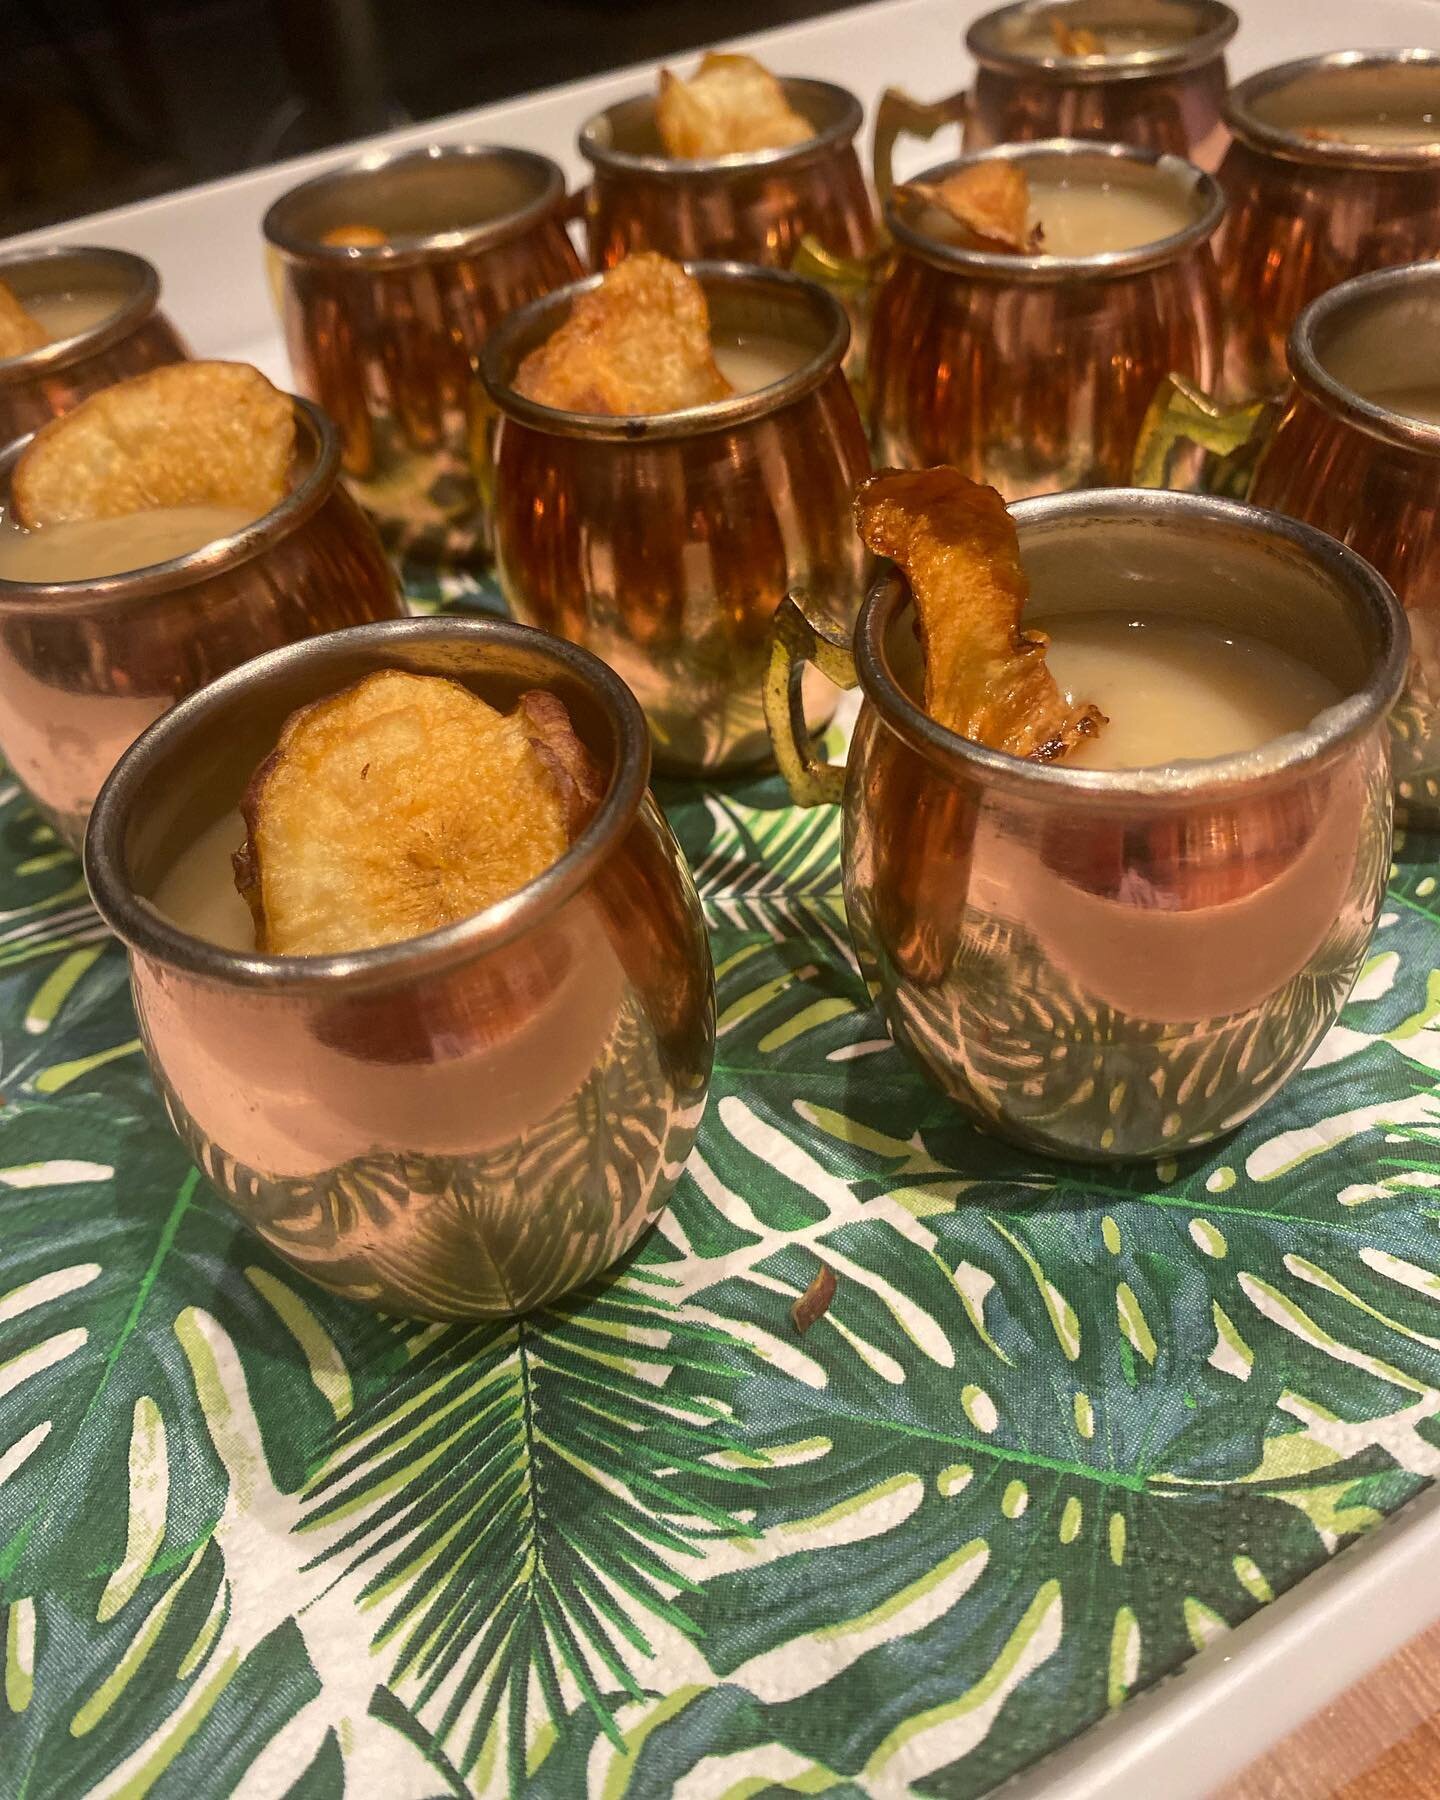 Our vegan dinner @lyrichammersmith for @worldlandtrust started off with these dinky Jerusalem artichoke soup sips #seasonalfood #vegan  #vegansoup #soup #canapes